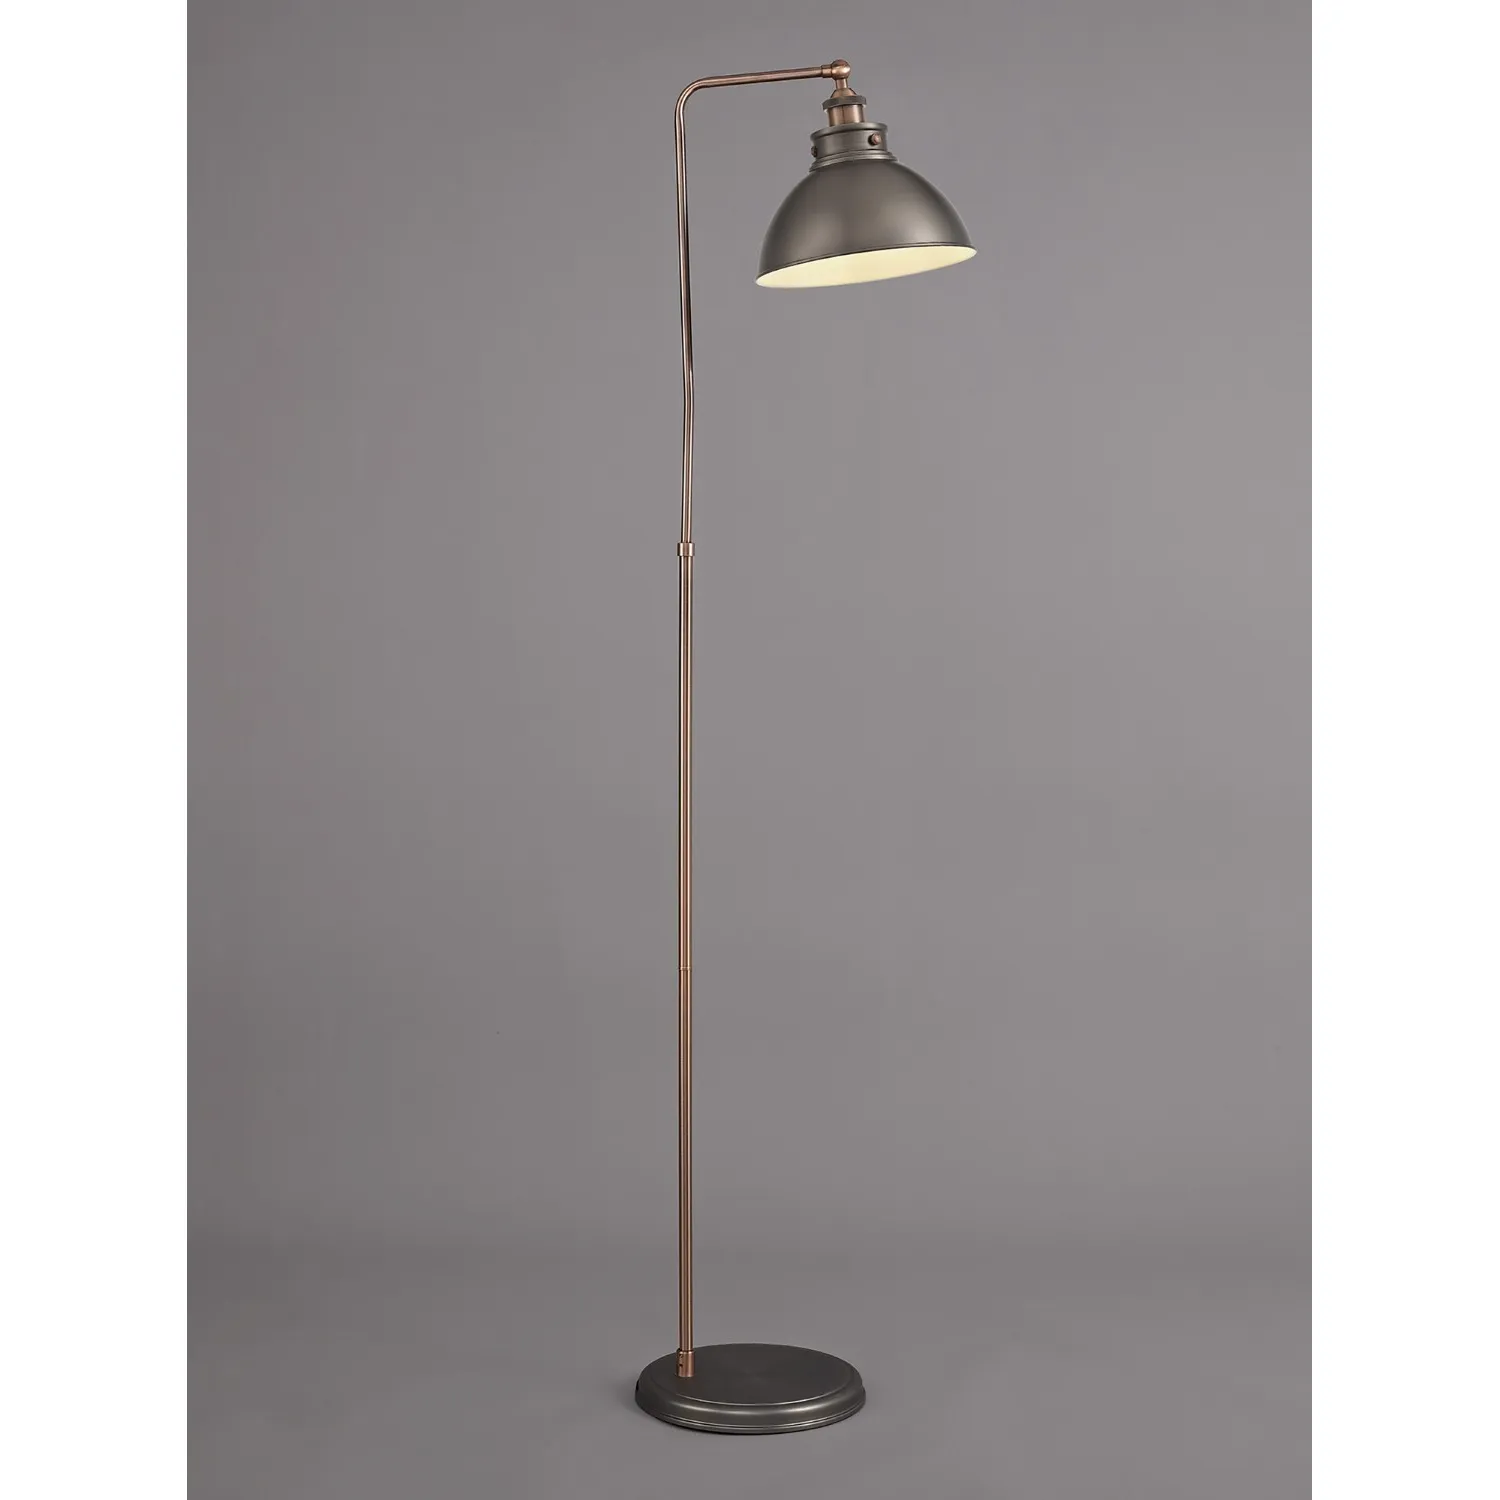 Savoy Adjustable Floor Lamp, 1 x E27, Antique Silver Copper White